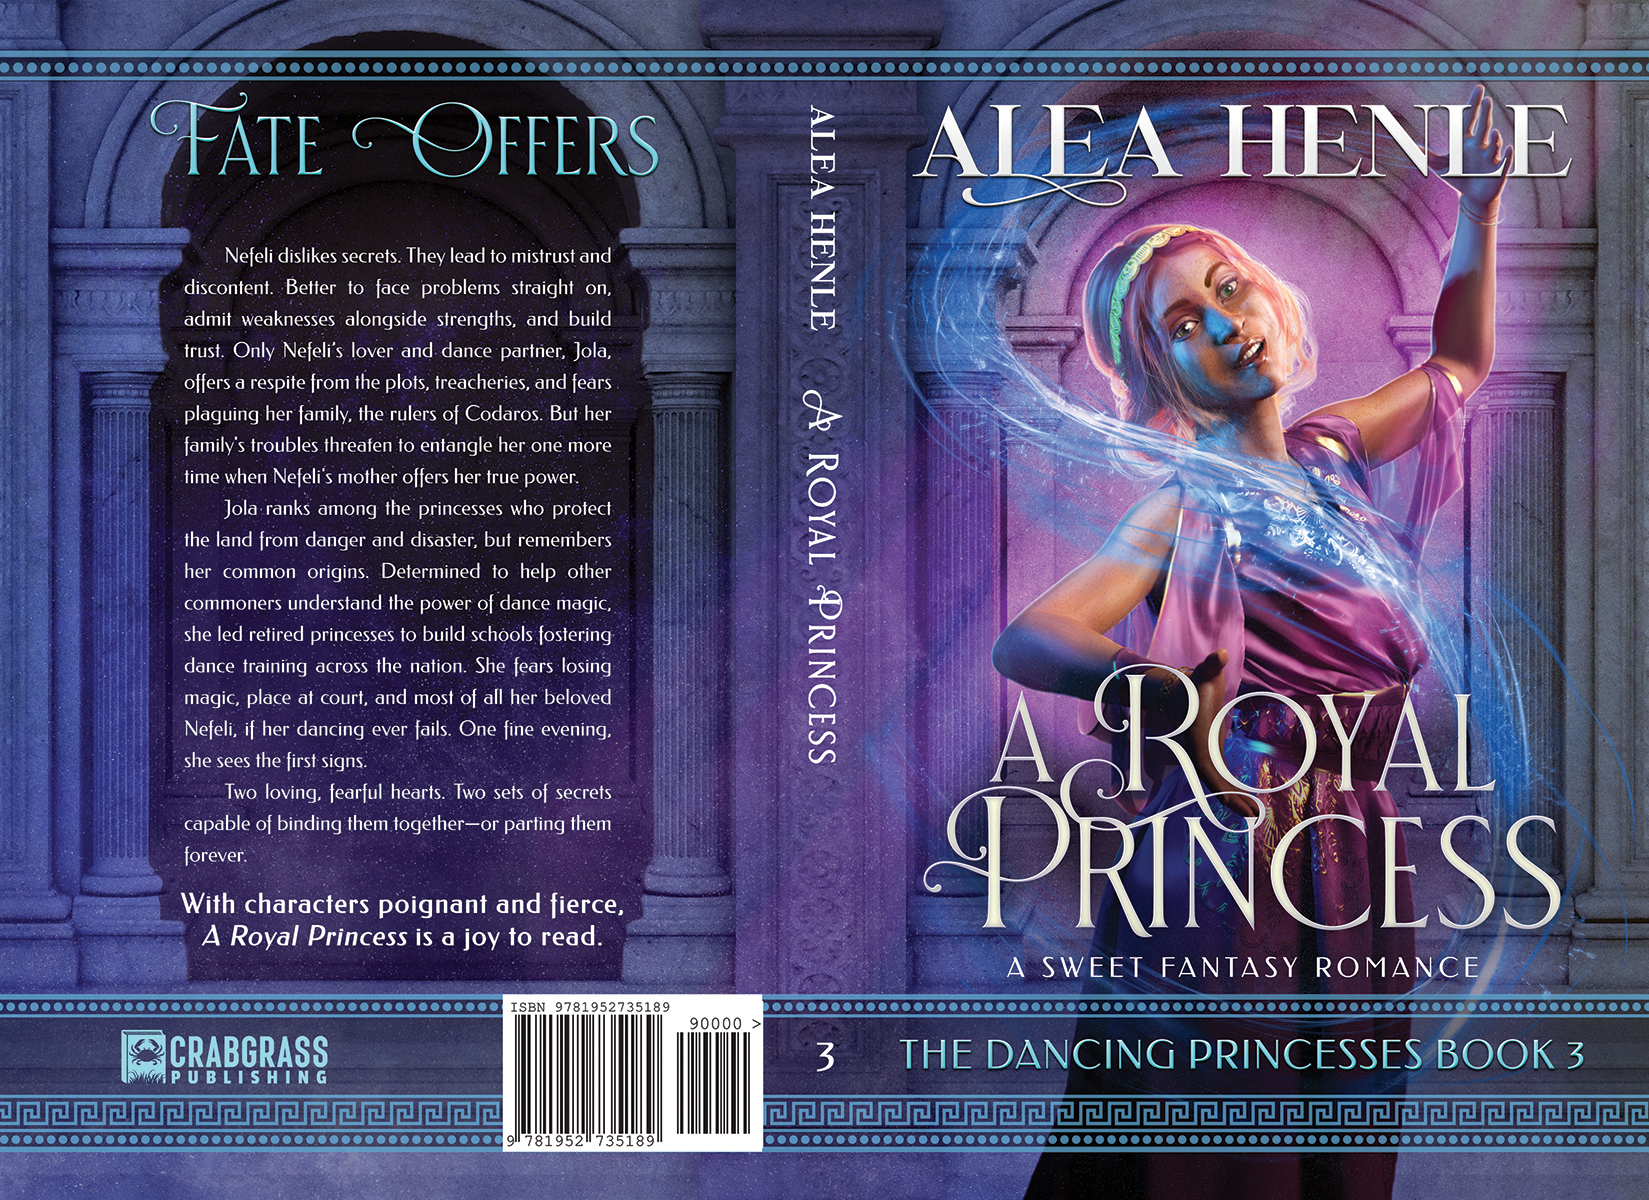 Alea Henle. A Royal Princess. Paperback.